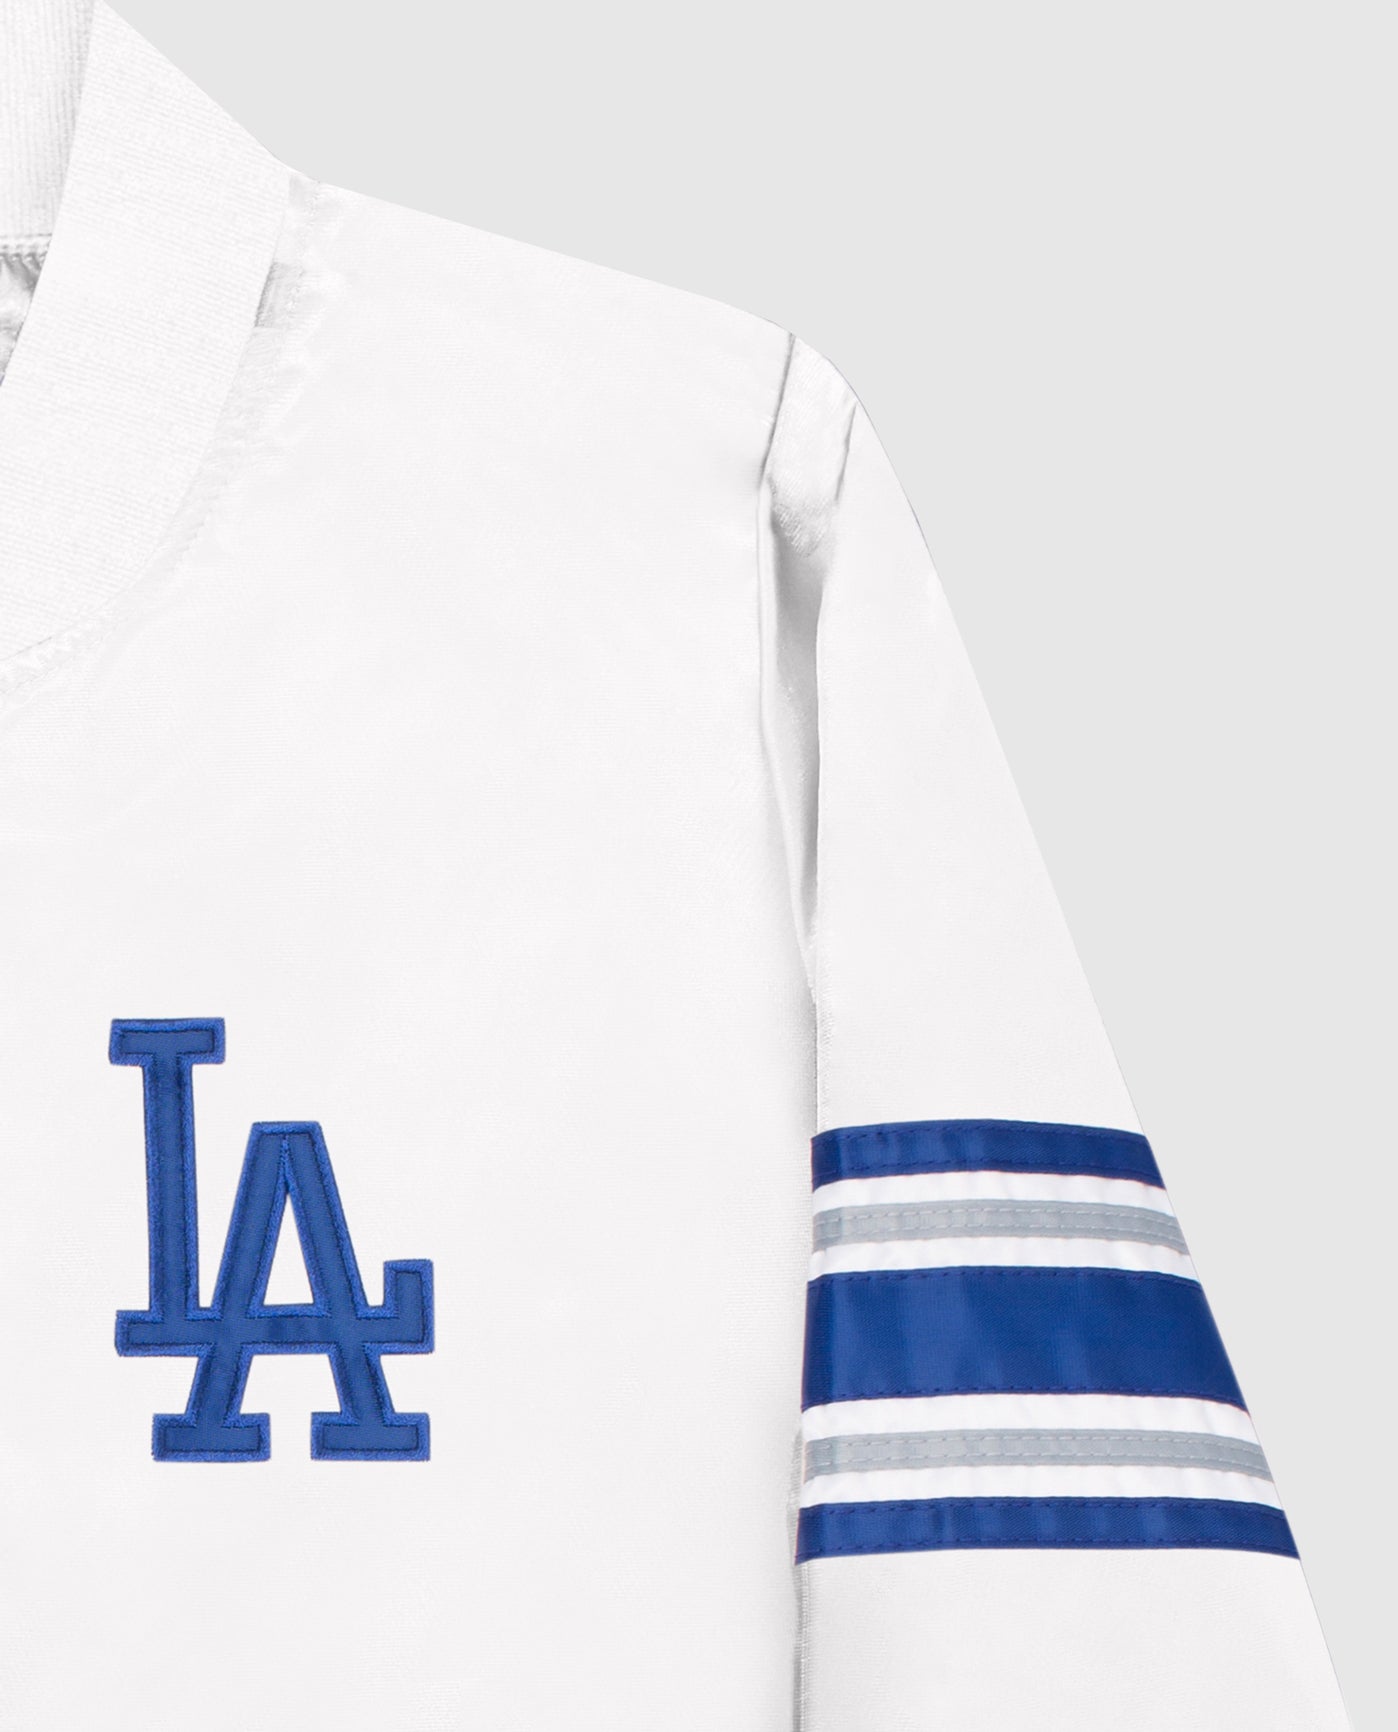 MLB Los Angeles Dodgers White Turquoise Baseball Jersey Shirt